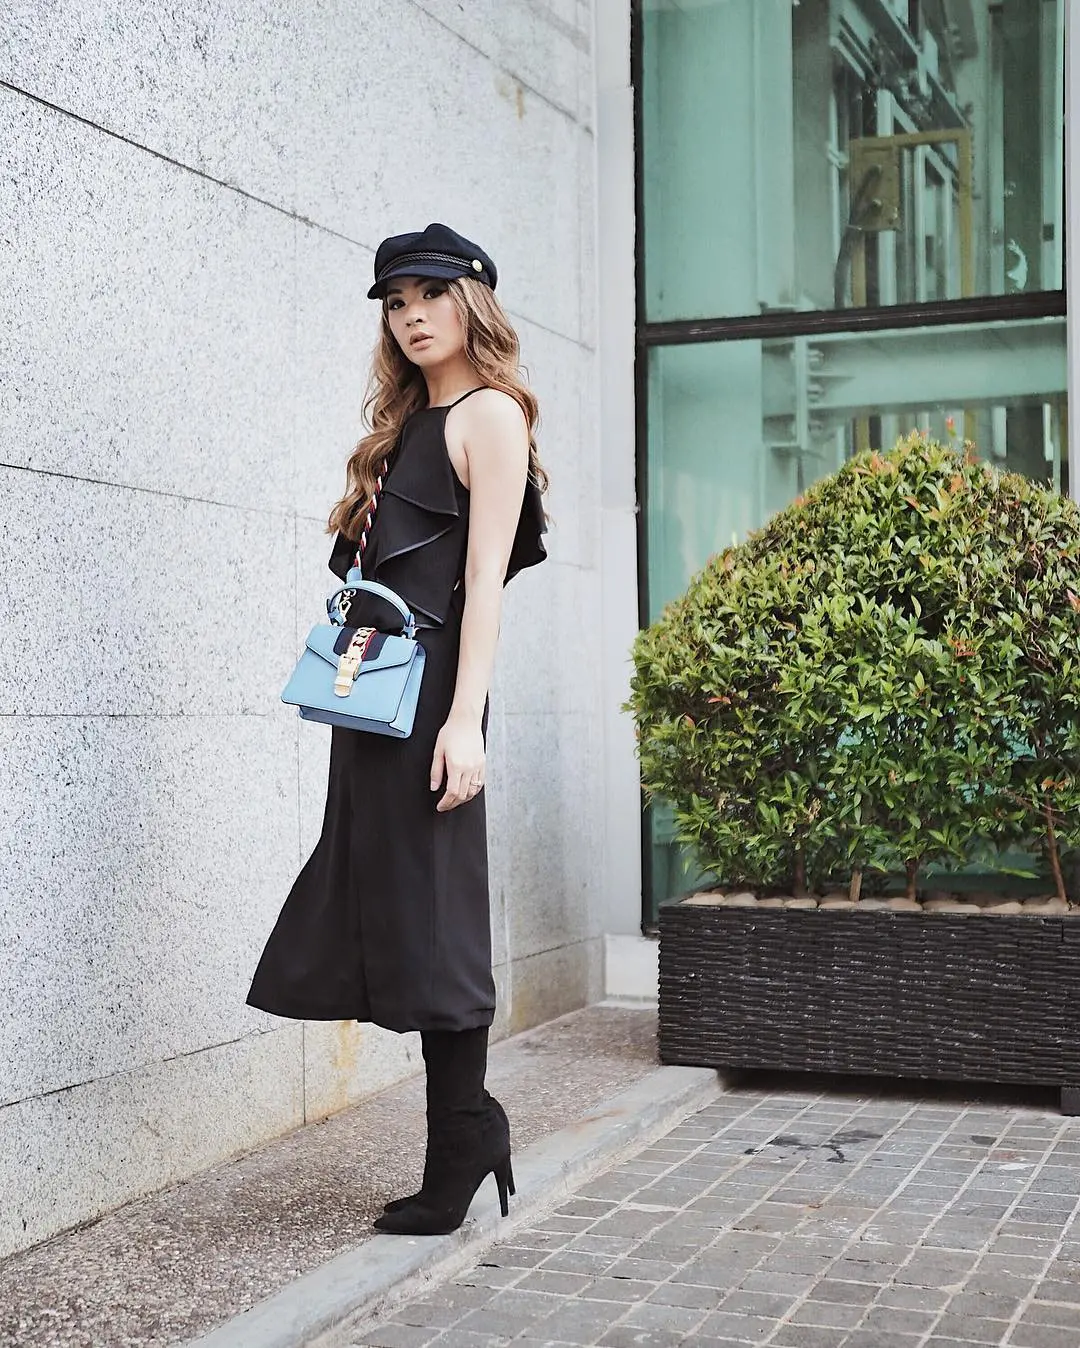 Padu padan outfit hitam ala fashion influencer supaya nggak membosankan. (Sumber foto: anazsiantar/instagram)